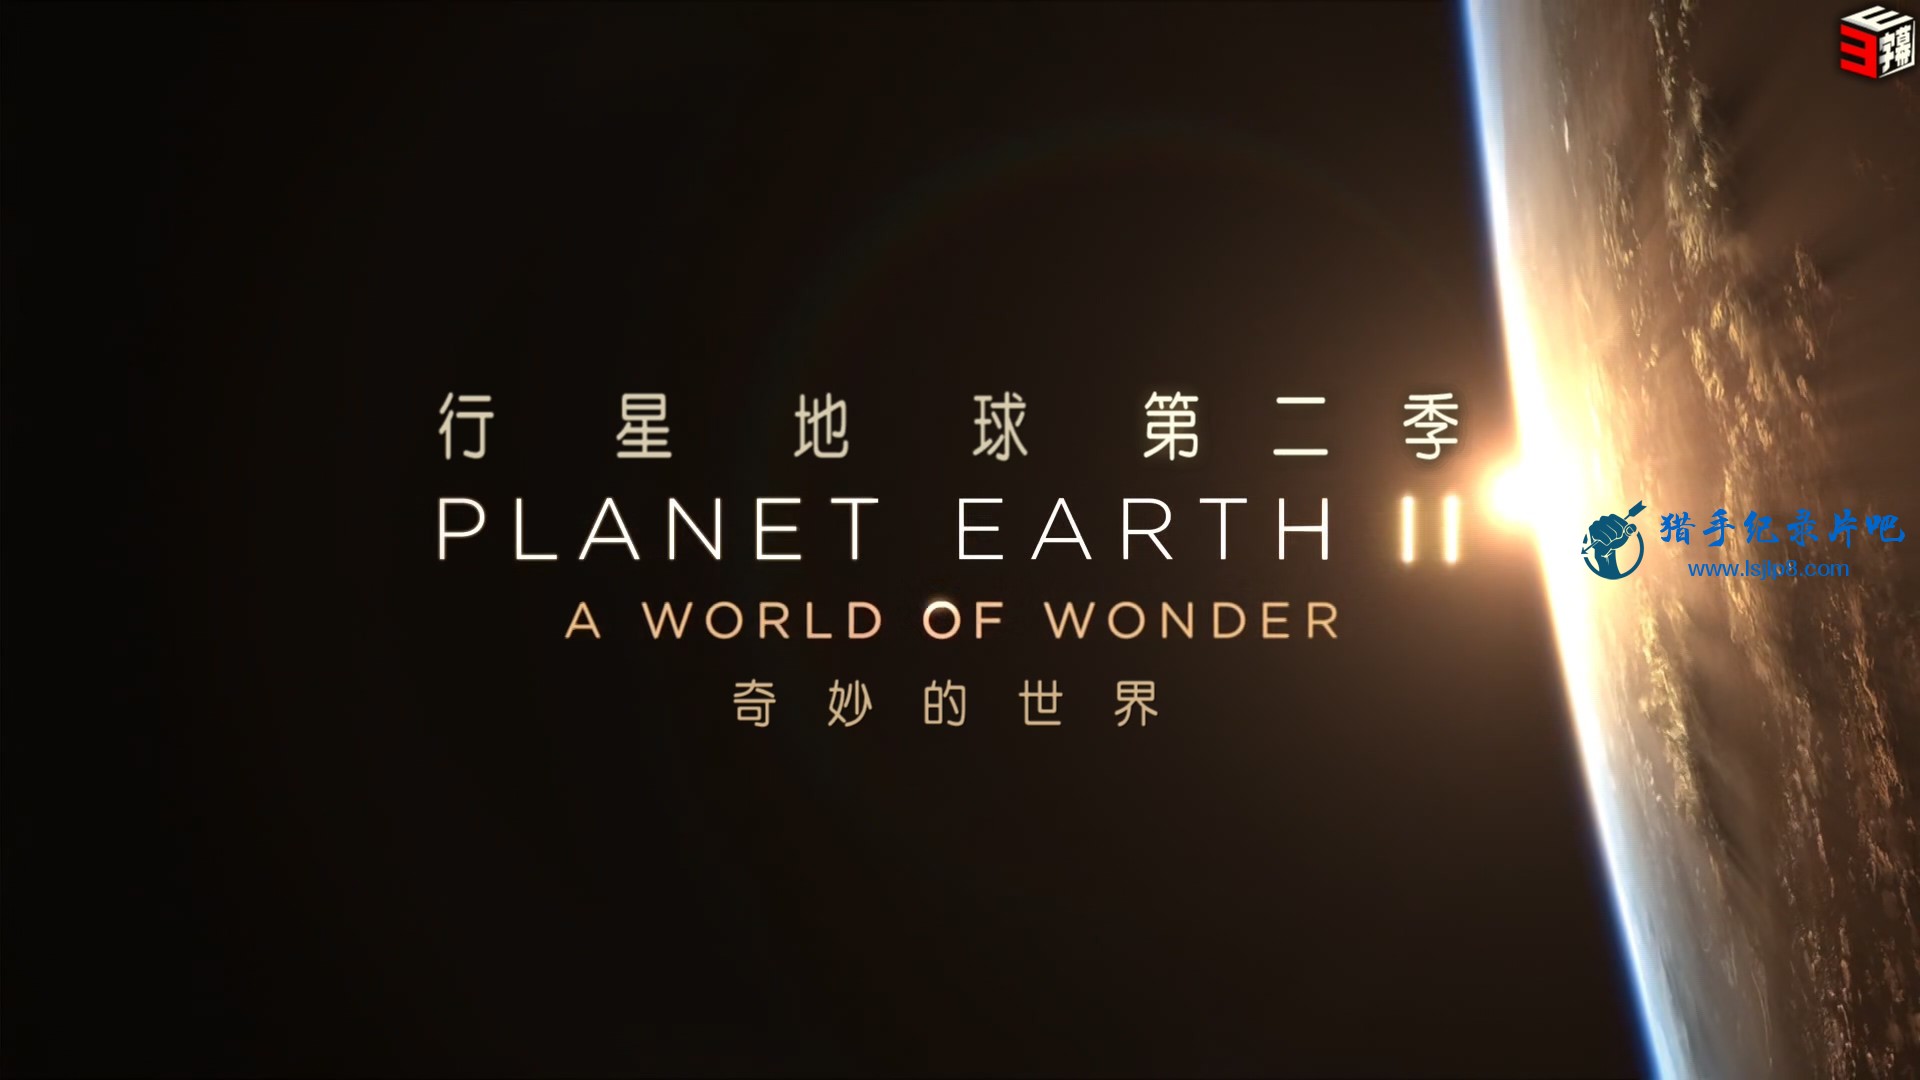 BBC.Planet.Earth.II.A.World.of.Wonder.1080p.HDTV.x265.AAC.MVGroup.org.mp4_202111.jpg